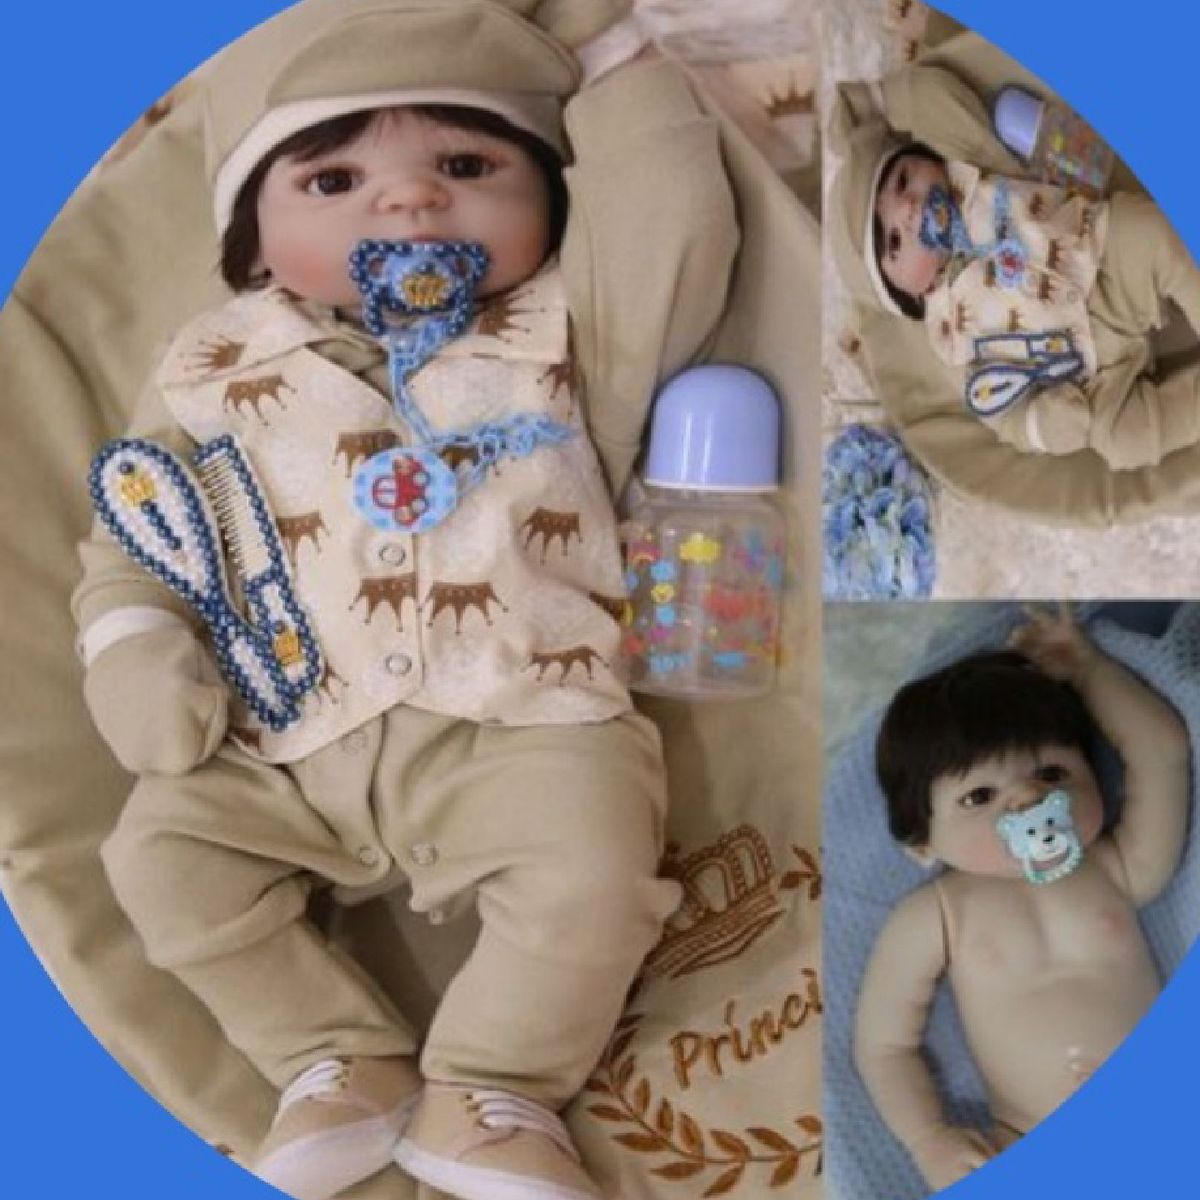 Bebê Reborn Silicone Menino 55cm + Enxoval Completo Cinza e azul